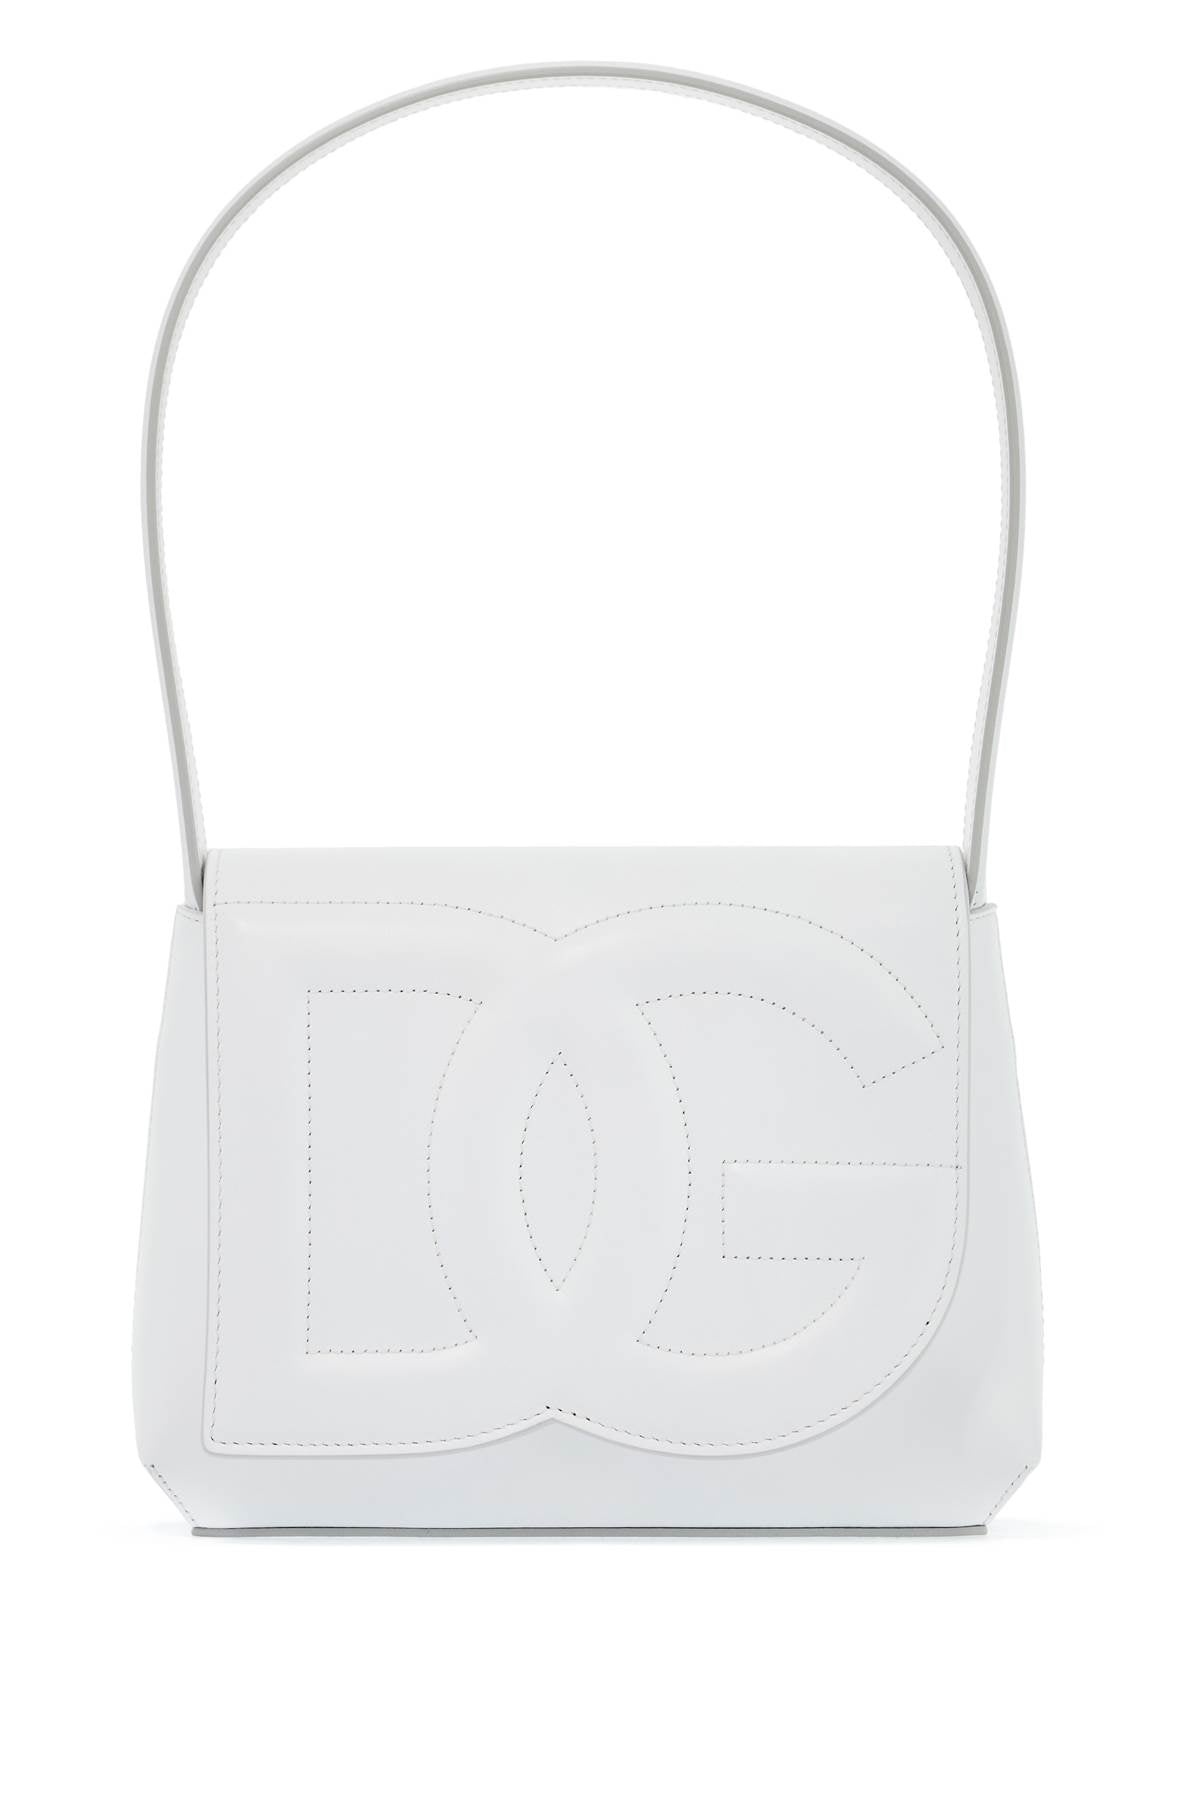 Dolce & Gabbana Dg Logo Shoulder Bag Women - 1